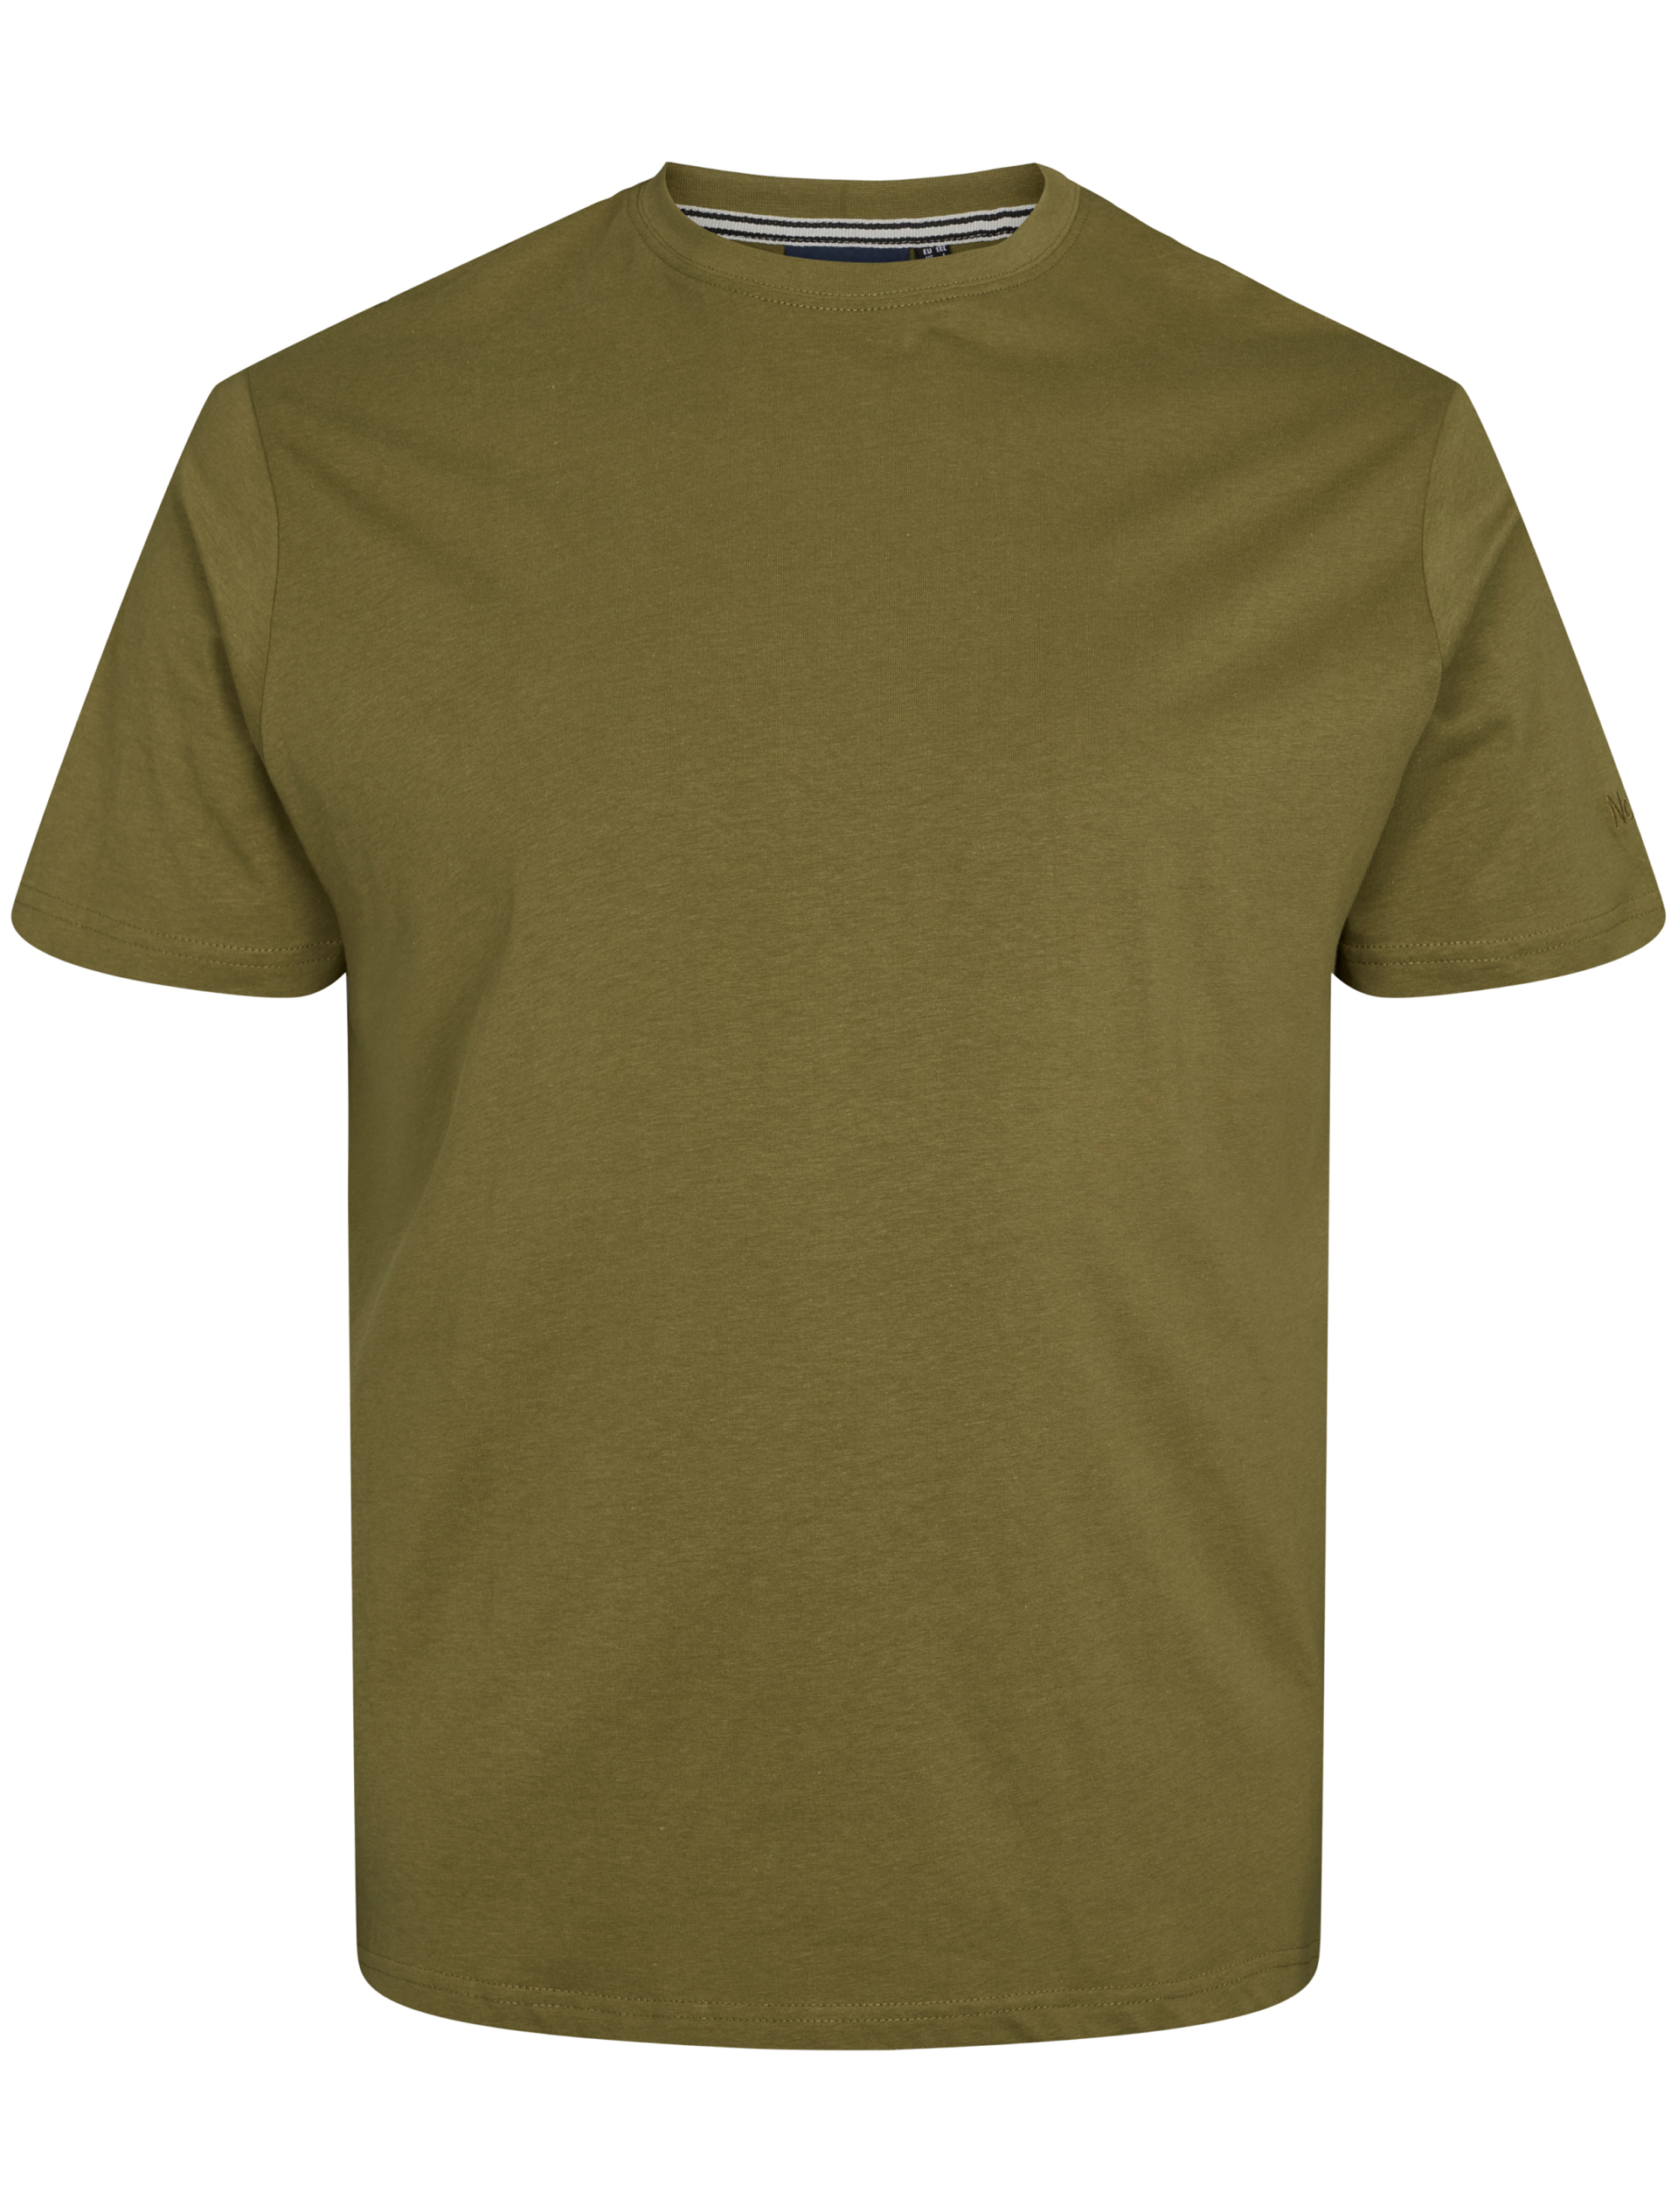 North T-shirt grøn / 0660 olive green